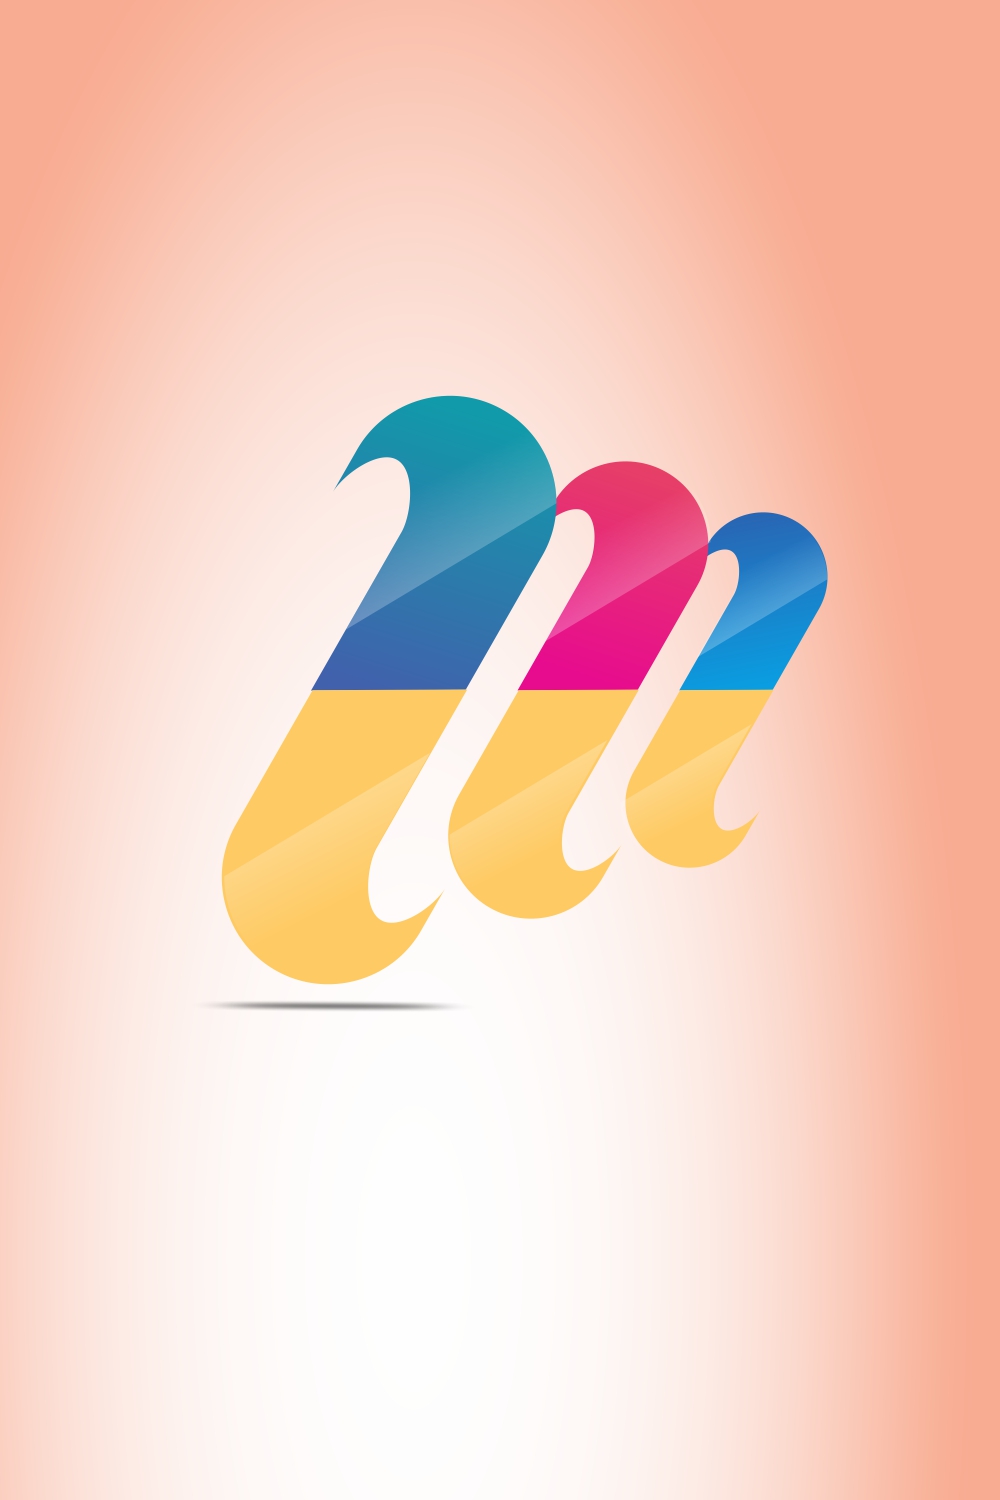 Letter M logo for Vector pinterest preview image.